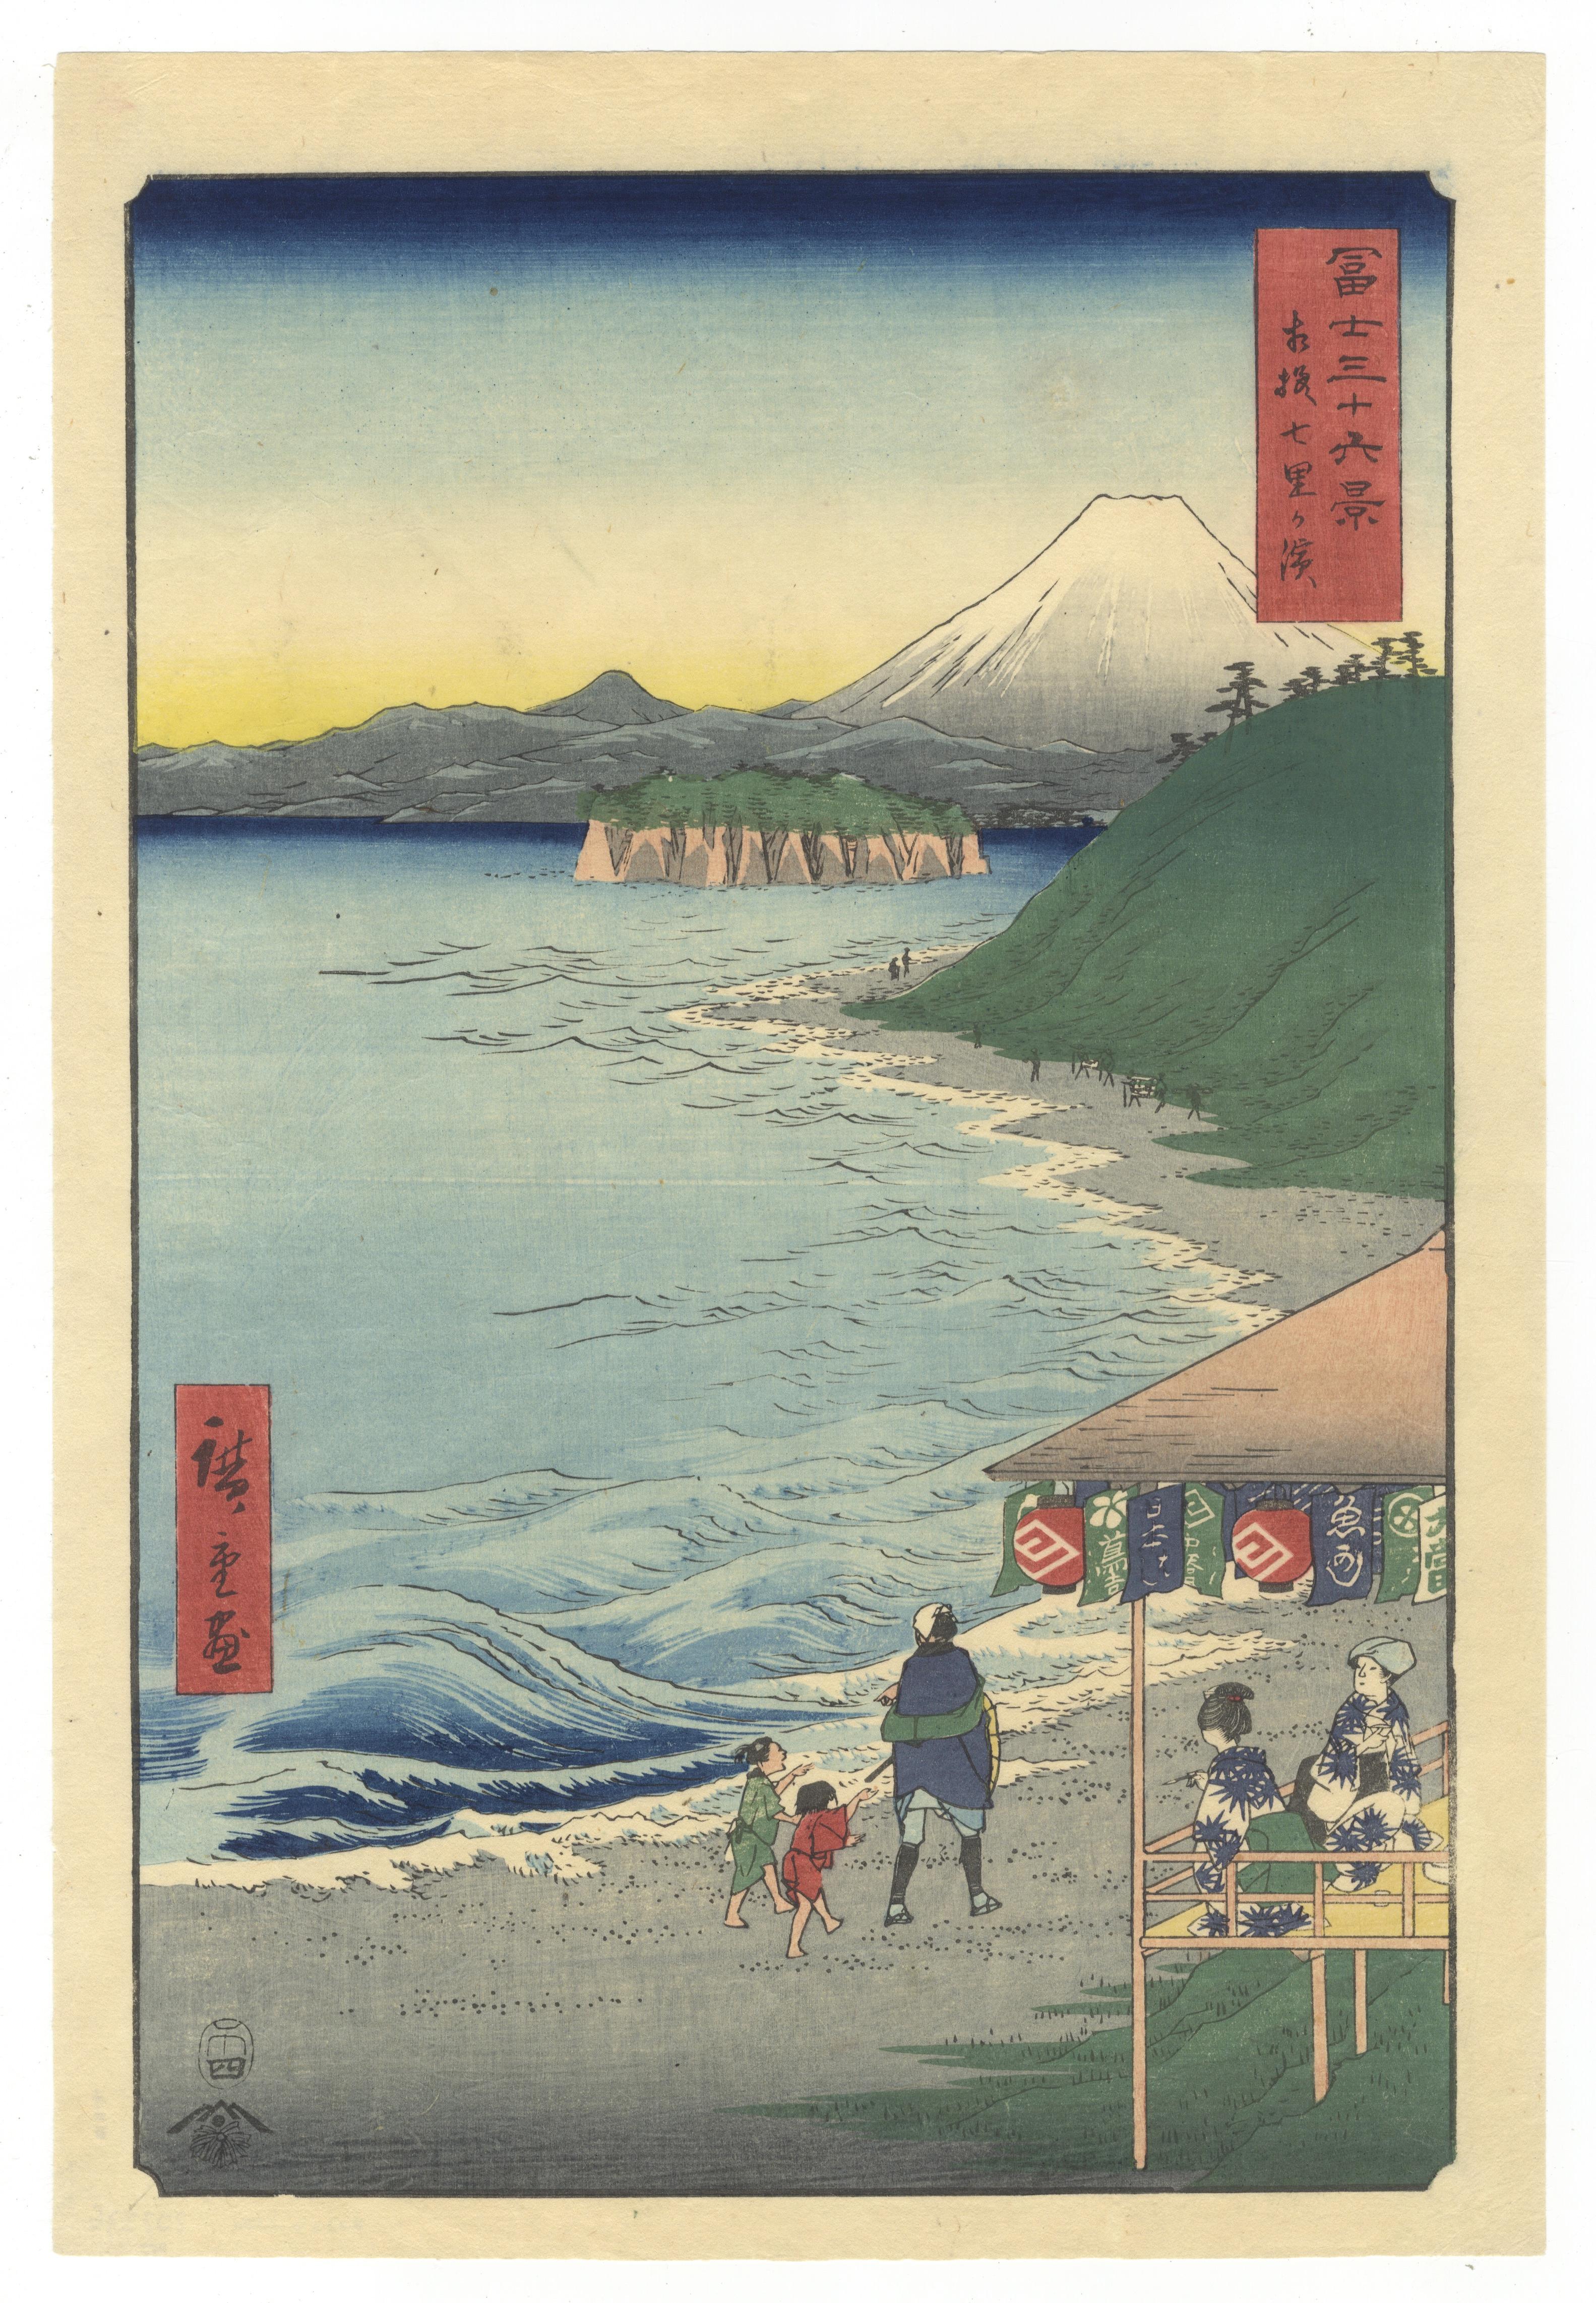 Utagawa Hiroshige (Ando Hiroshige) Portrait Print - Hiroshige I, 36 Views of Fuji, Shichirigahama, Original Woodblock Print, Edo